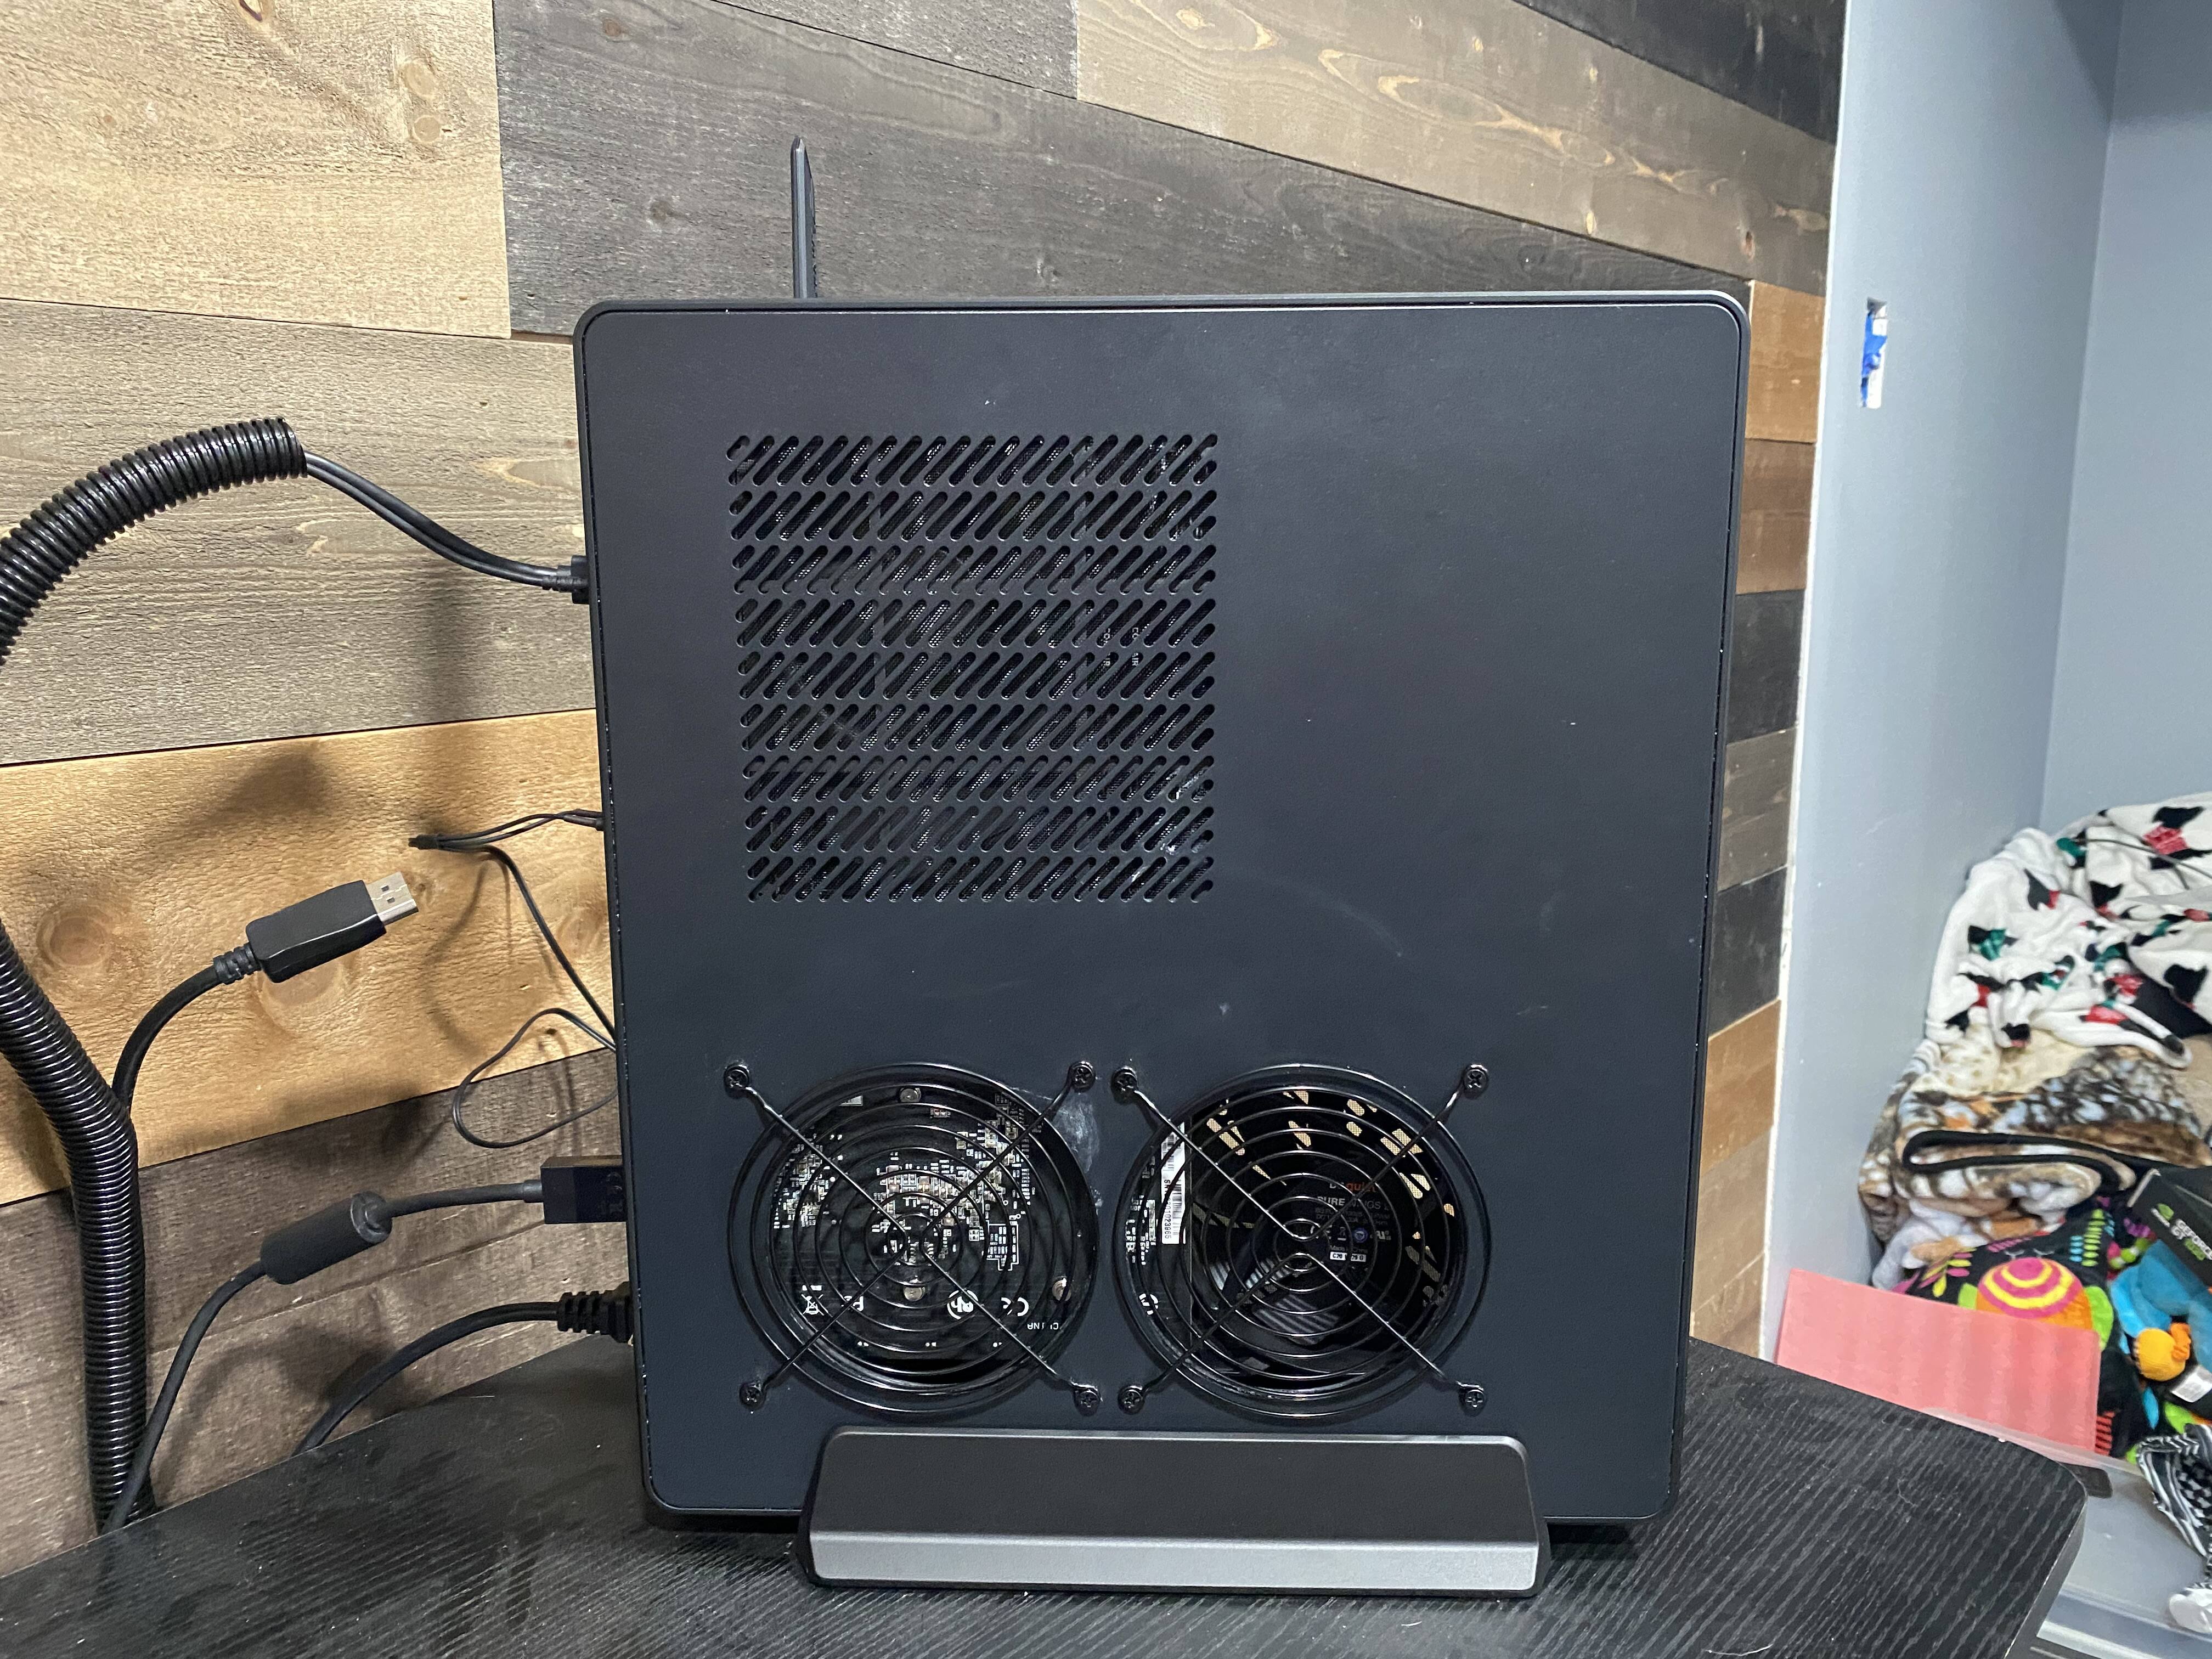 AIO CPU Cooler in Fractal Design Node 202... Using GPU Fans Ventilation. - Cooling - Linus Tech Tips